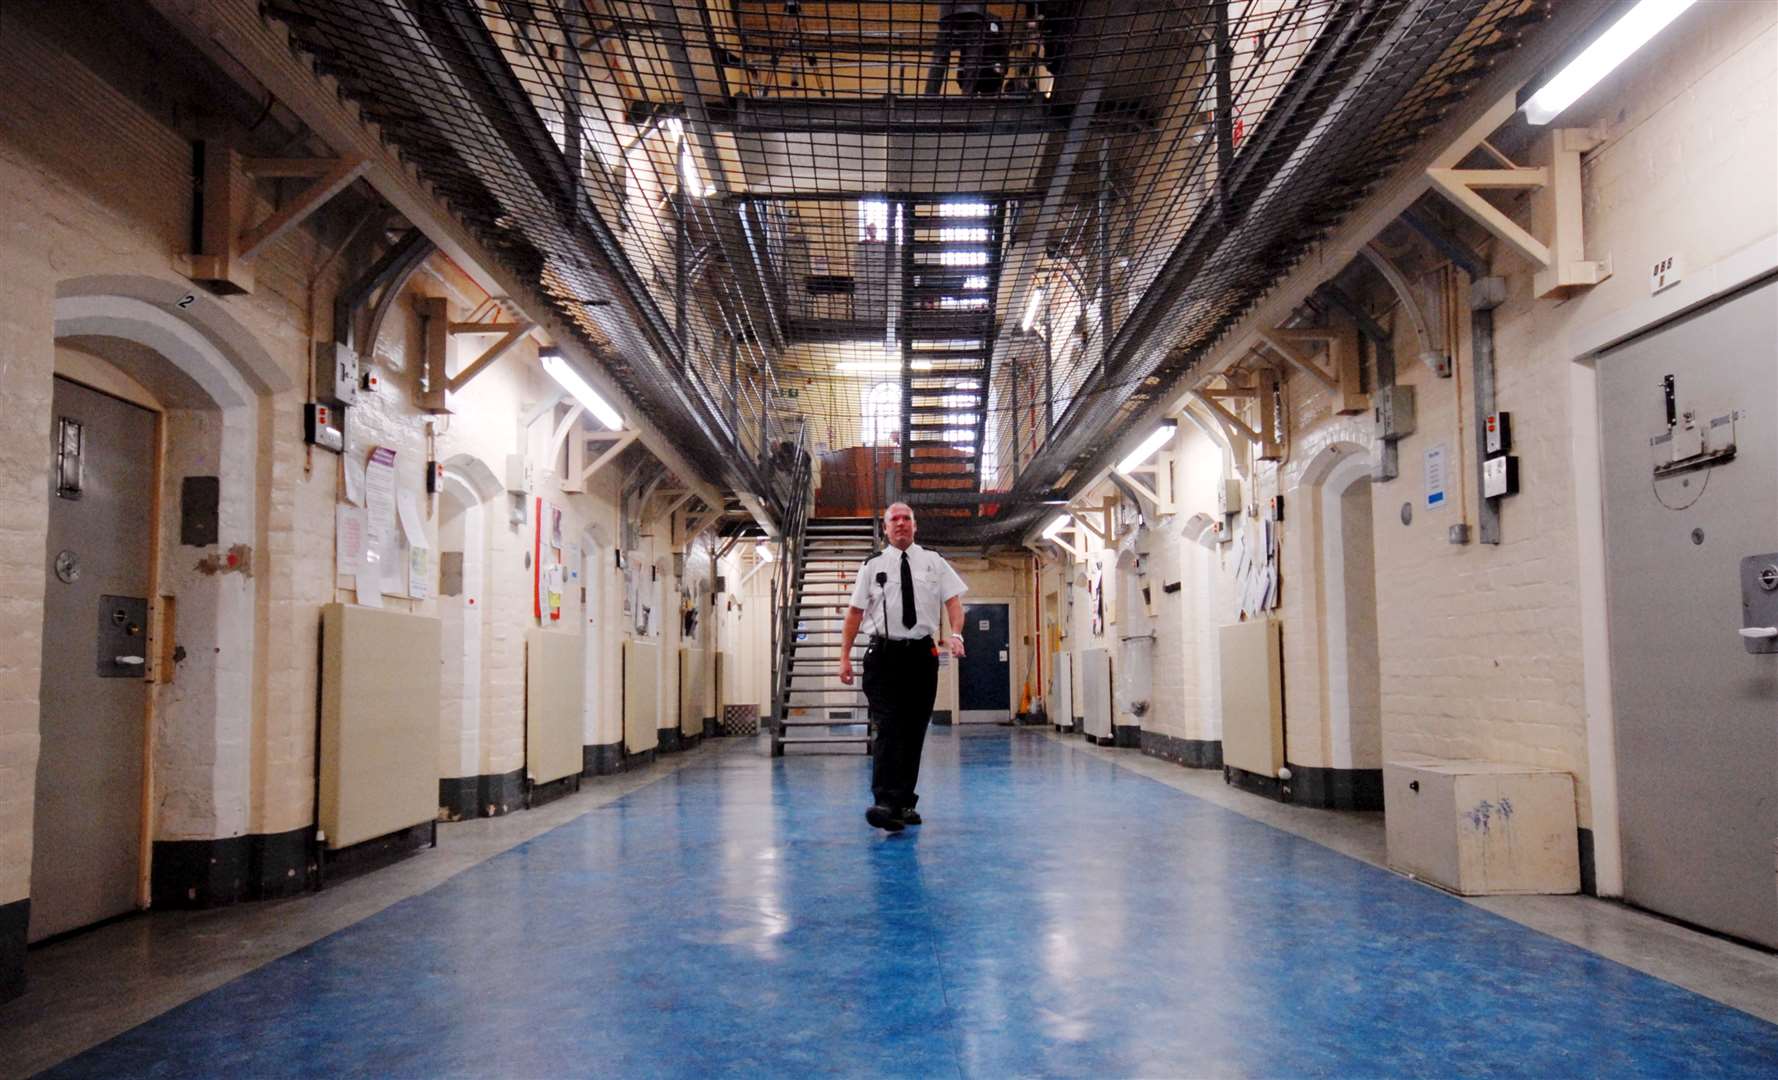 Inside Inverness Prison.